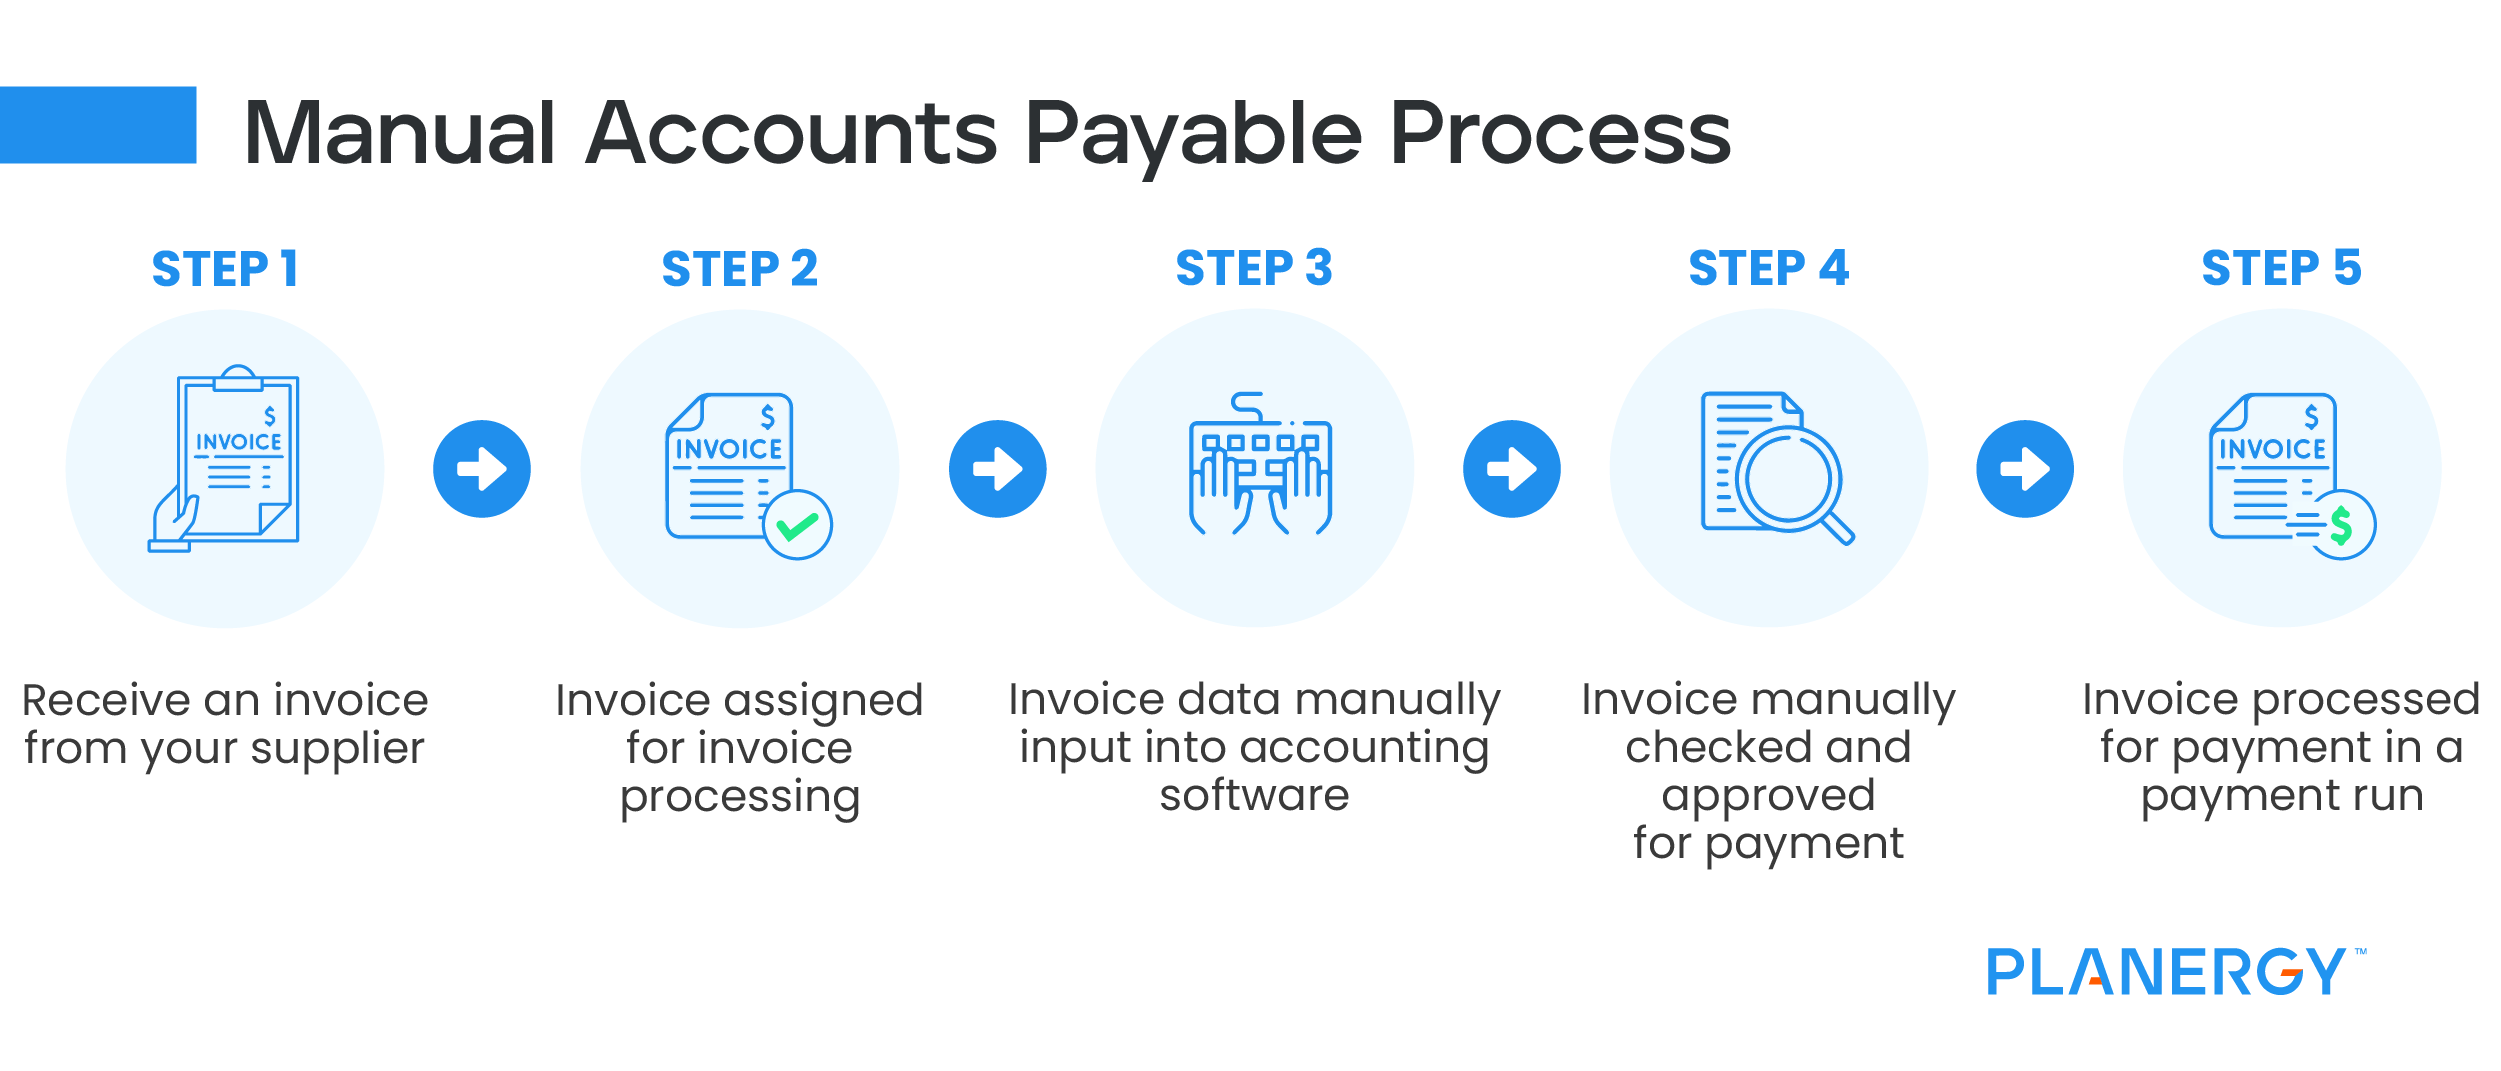 Manual Accounts Payable Process